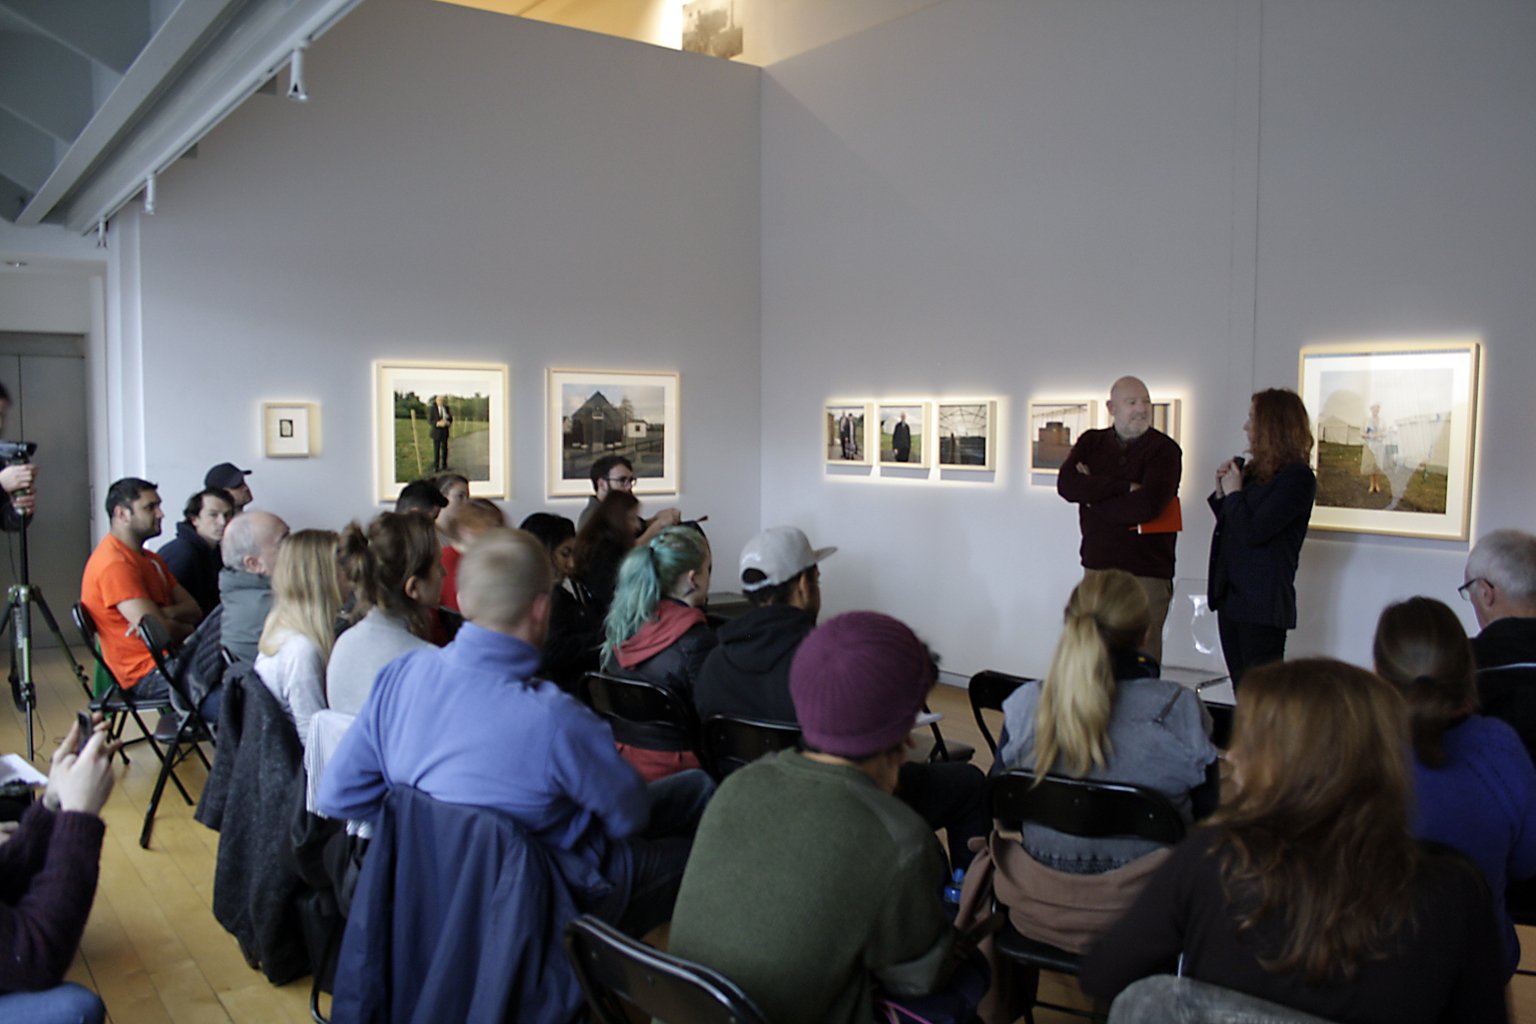  Photographer Gordon Ashbridge with Curator Trish Lambe, giving a talk on the exhibition 